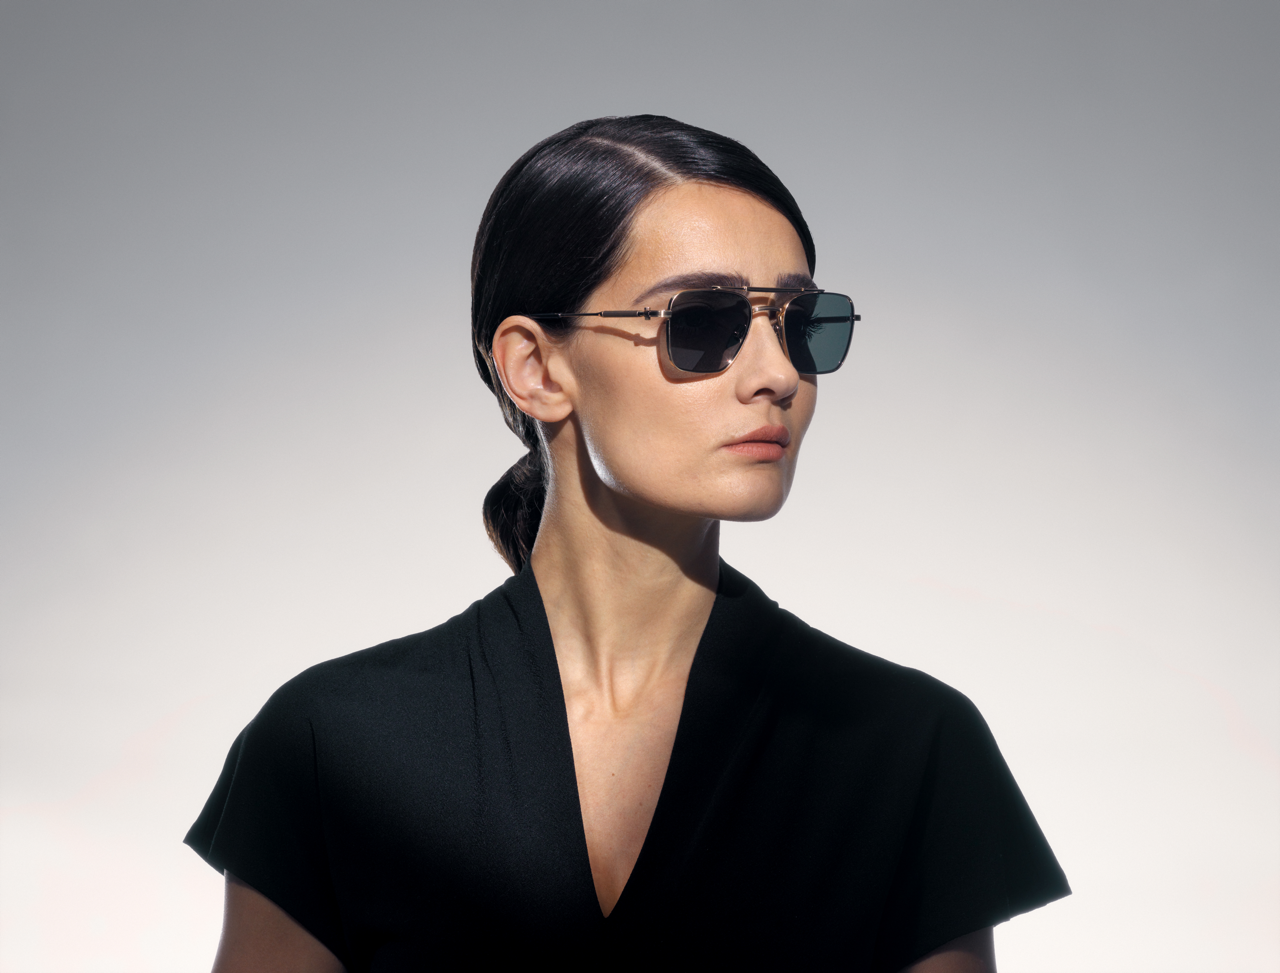 akoni europa sunglasses lifestyle side female